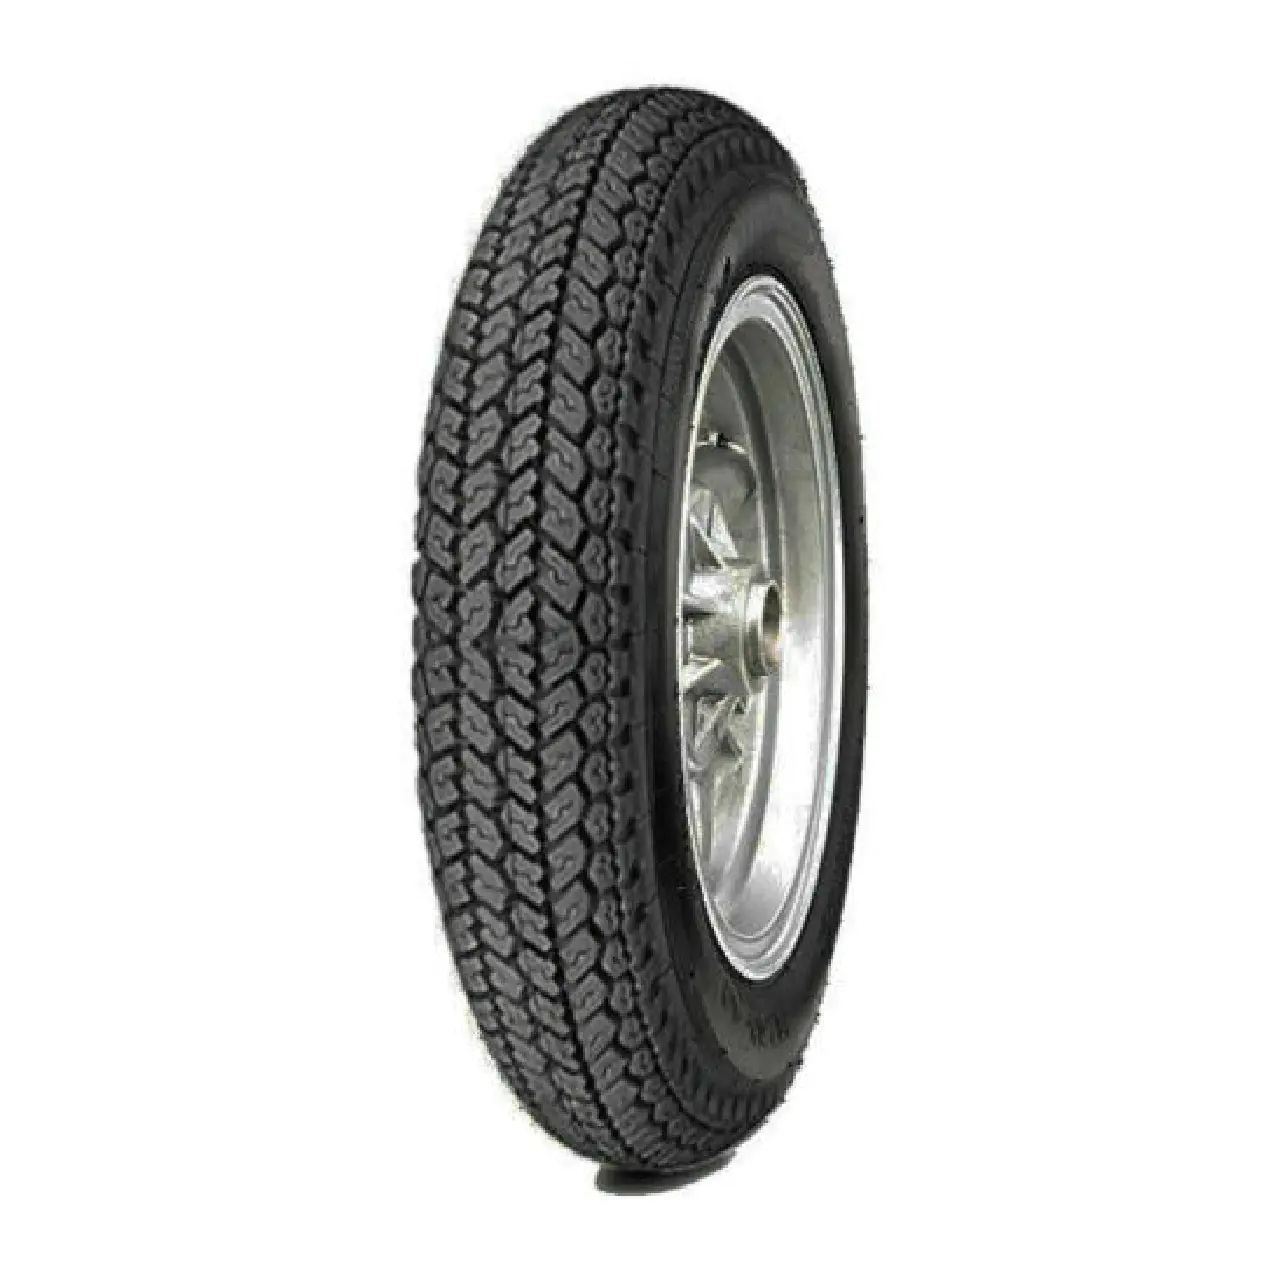 CST Tyres CST Tyres 100/90-10 61J C-254N pneumatici nuovi Estivo 